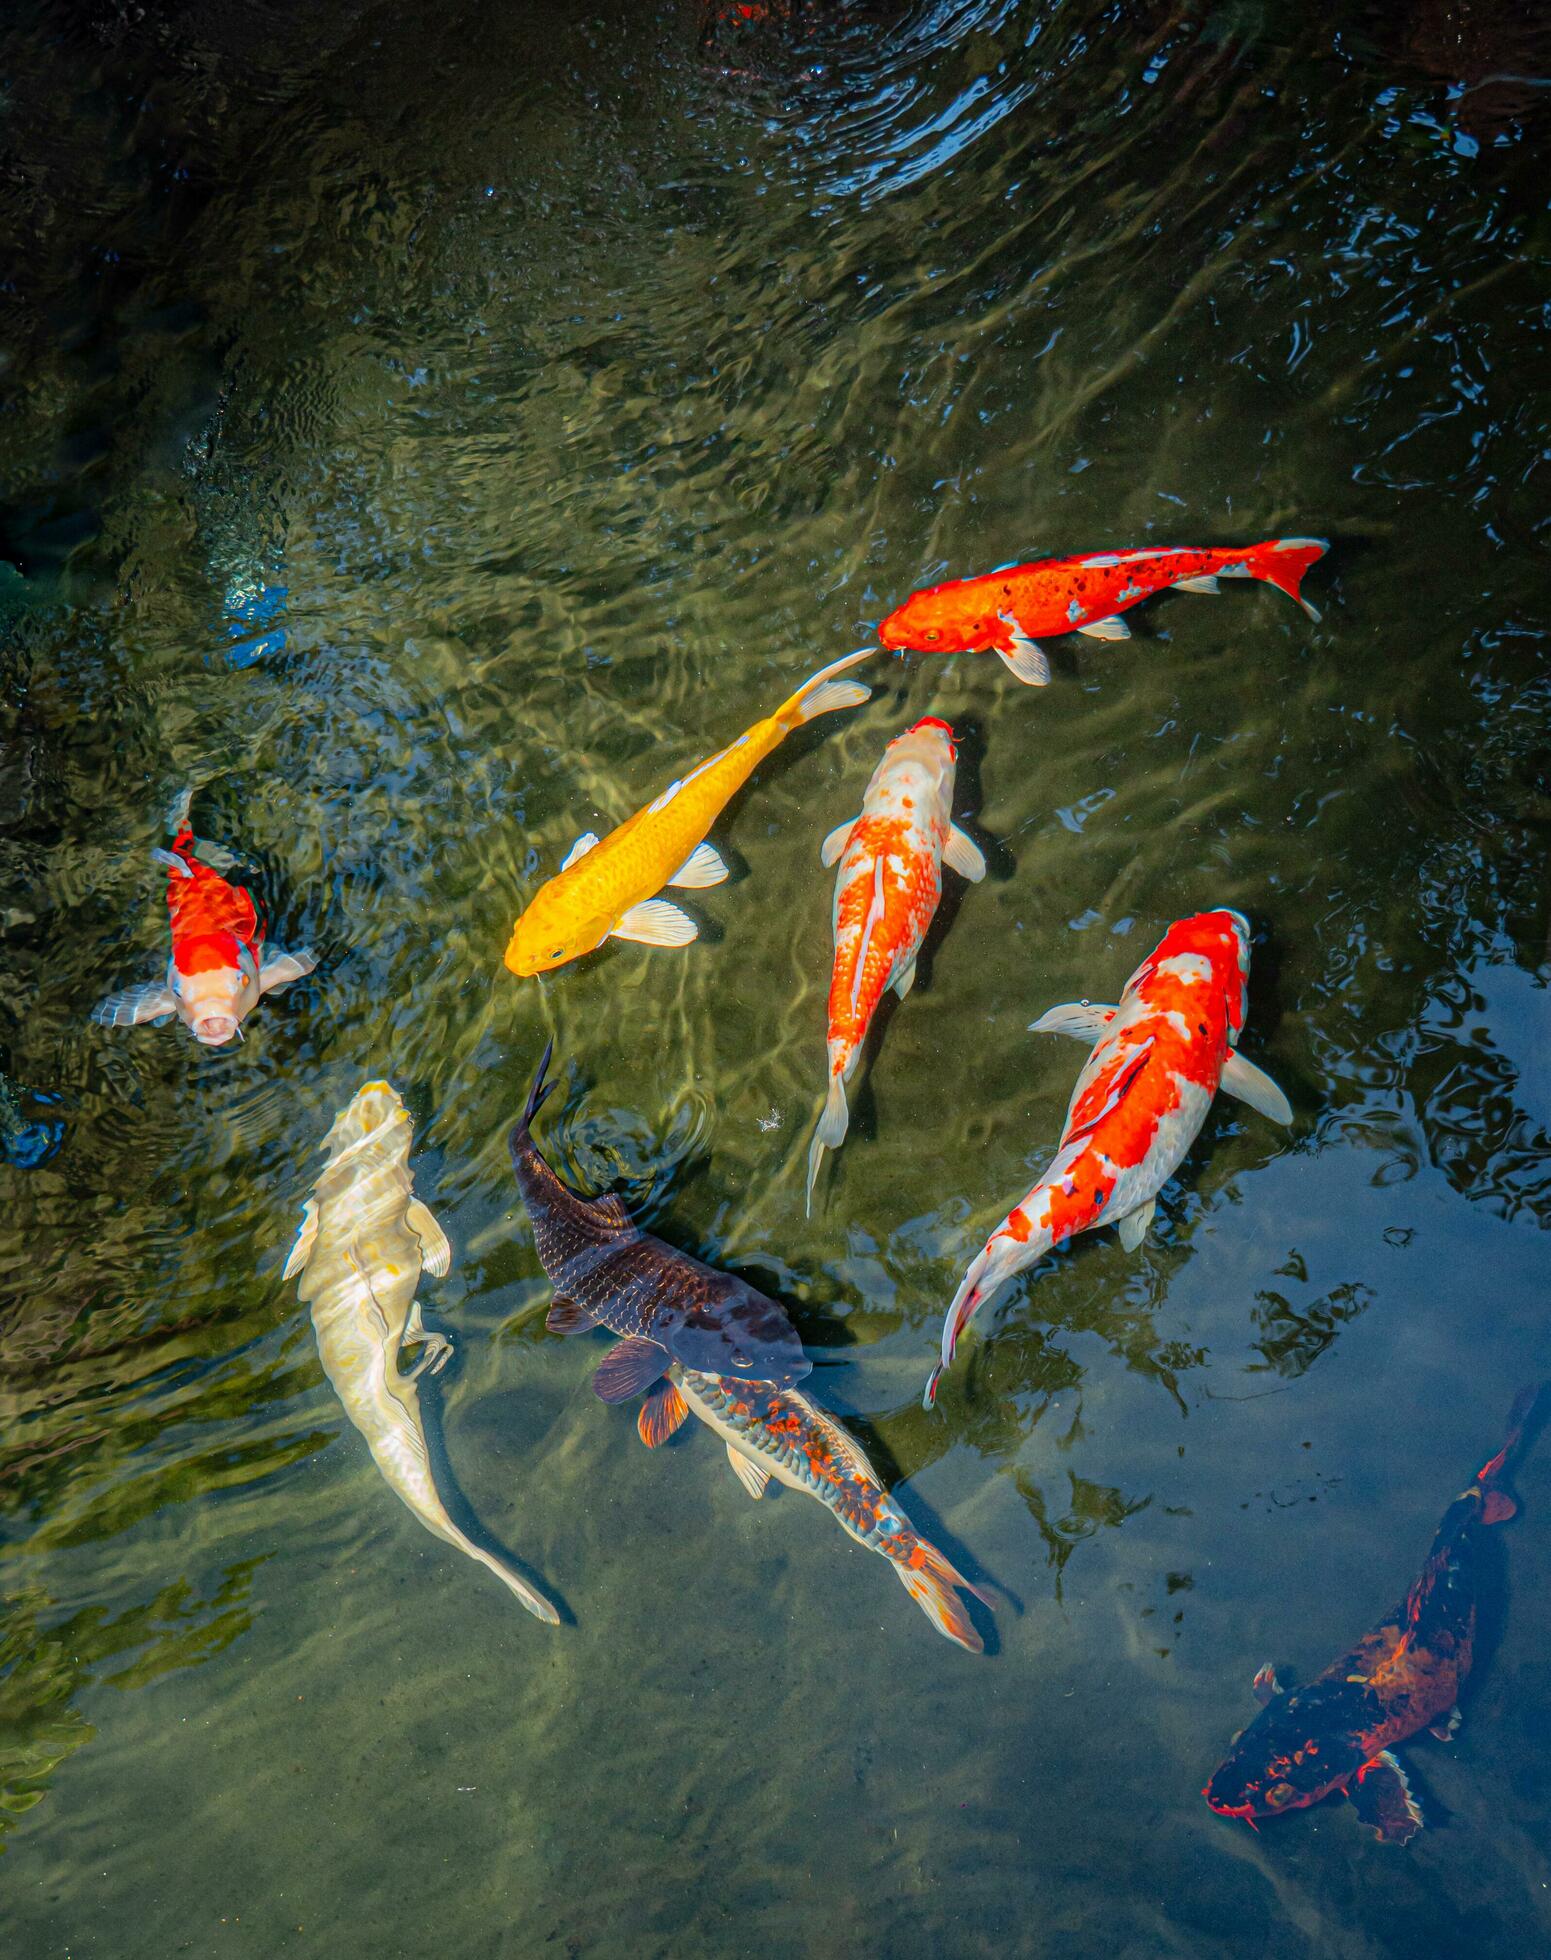 Japan koi fish or Fancy Carp swimming in a black pond fish pond